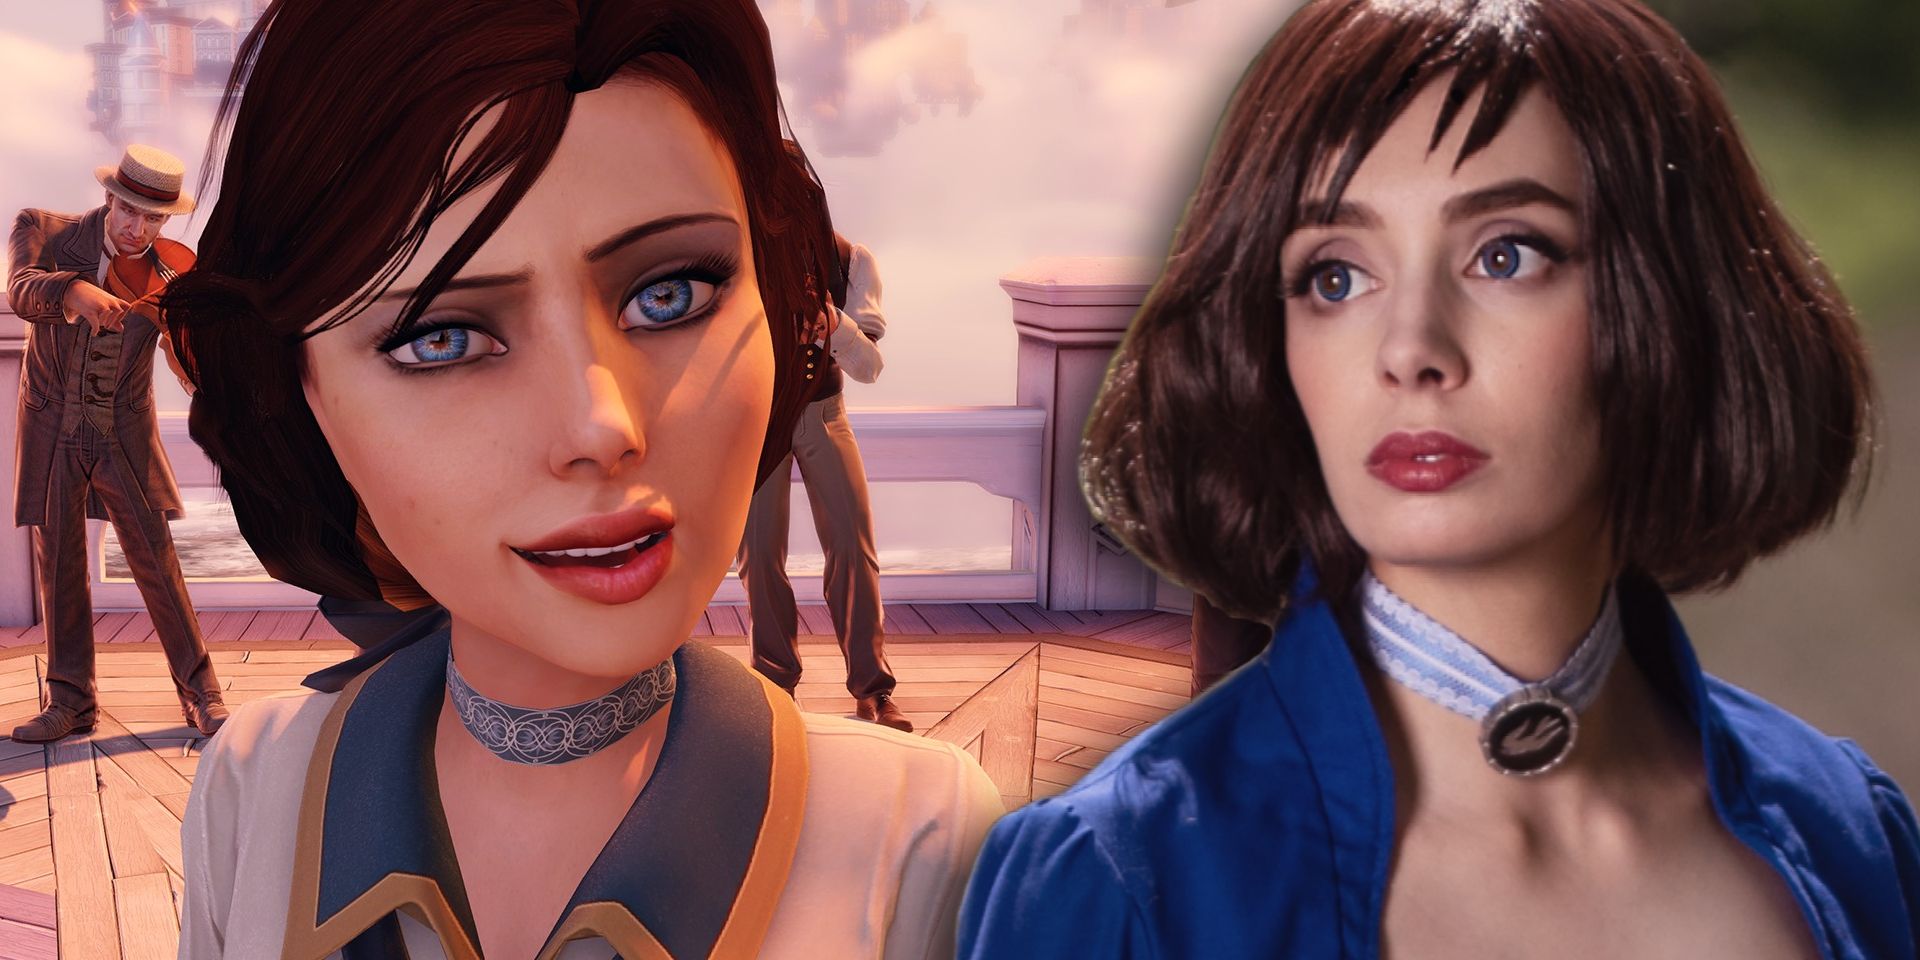 BioShock Infinite's Elizabeth with a Cosplay.